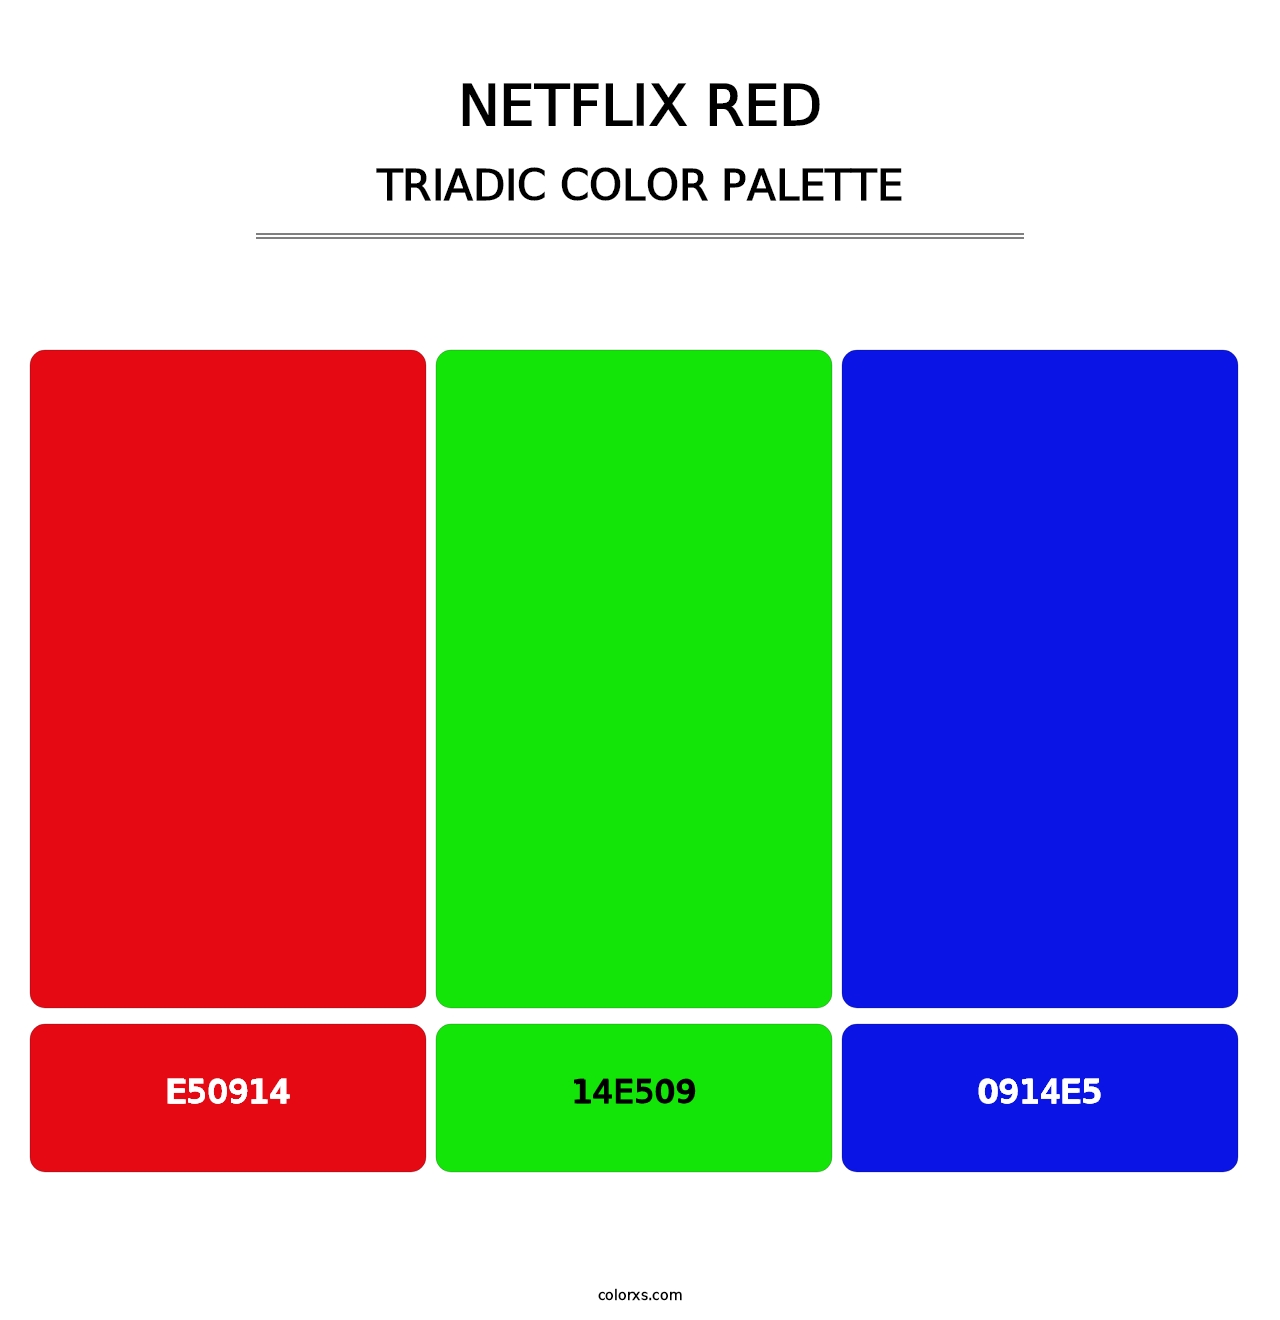 Netflix Red - Triadic Color Palette